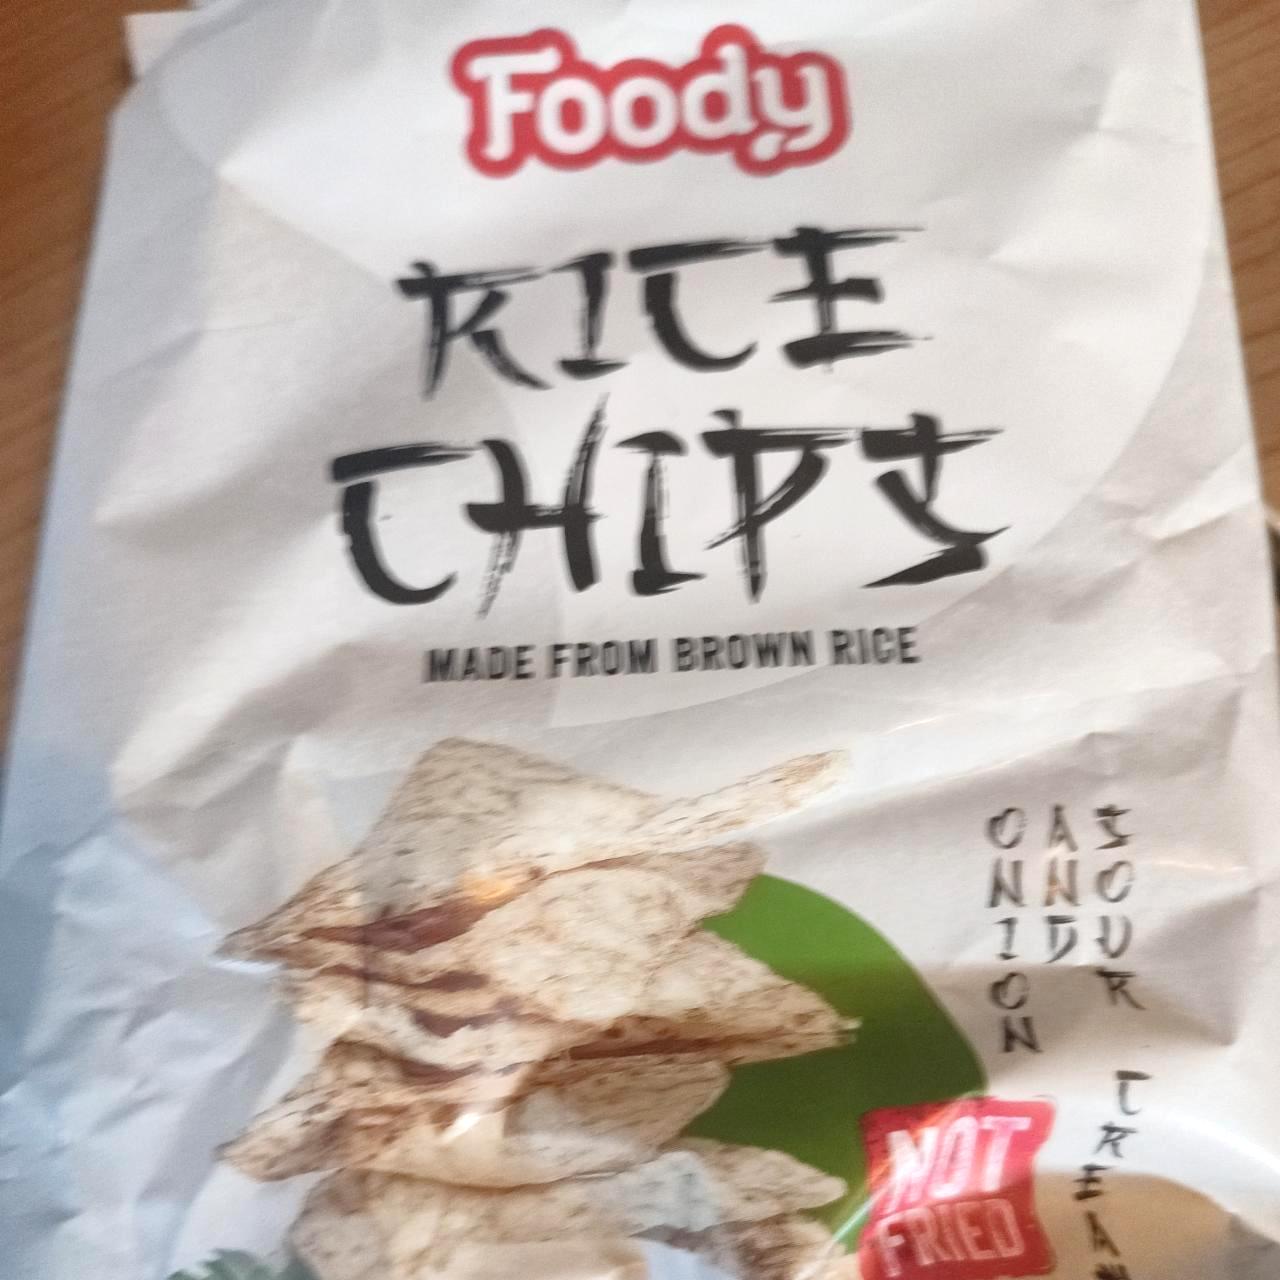 Képek - Rizs chips Foody